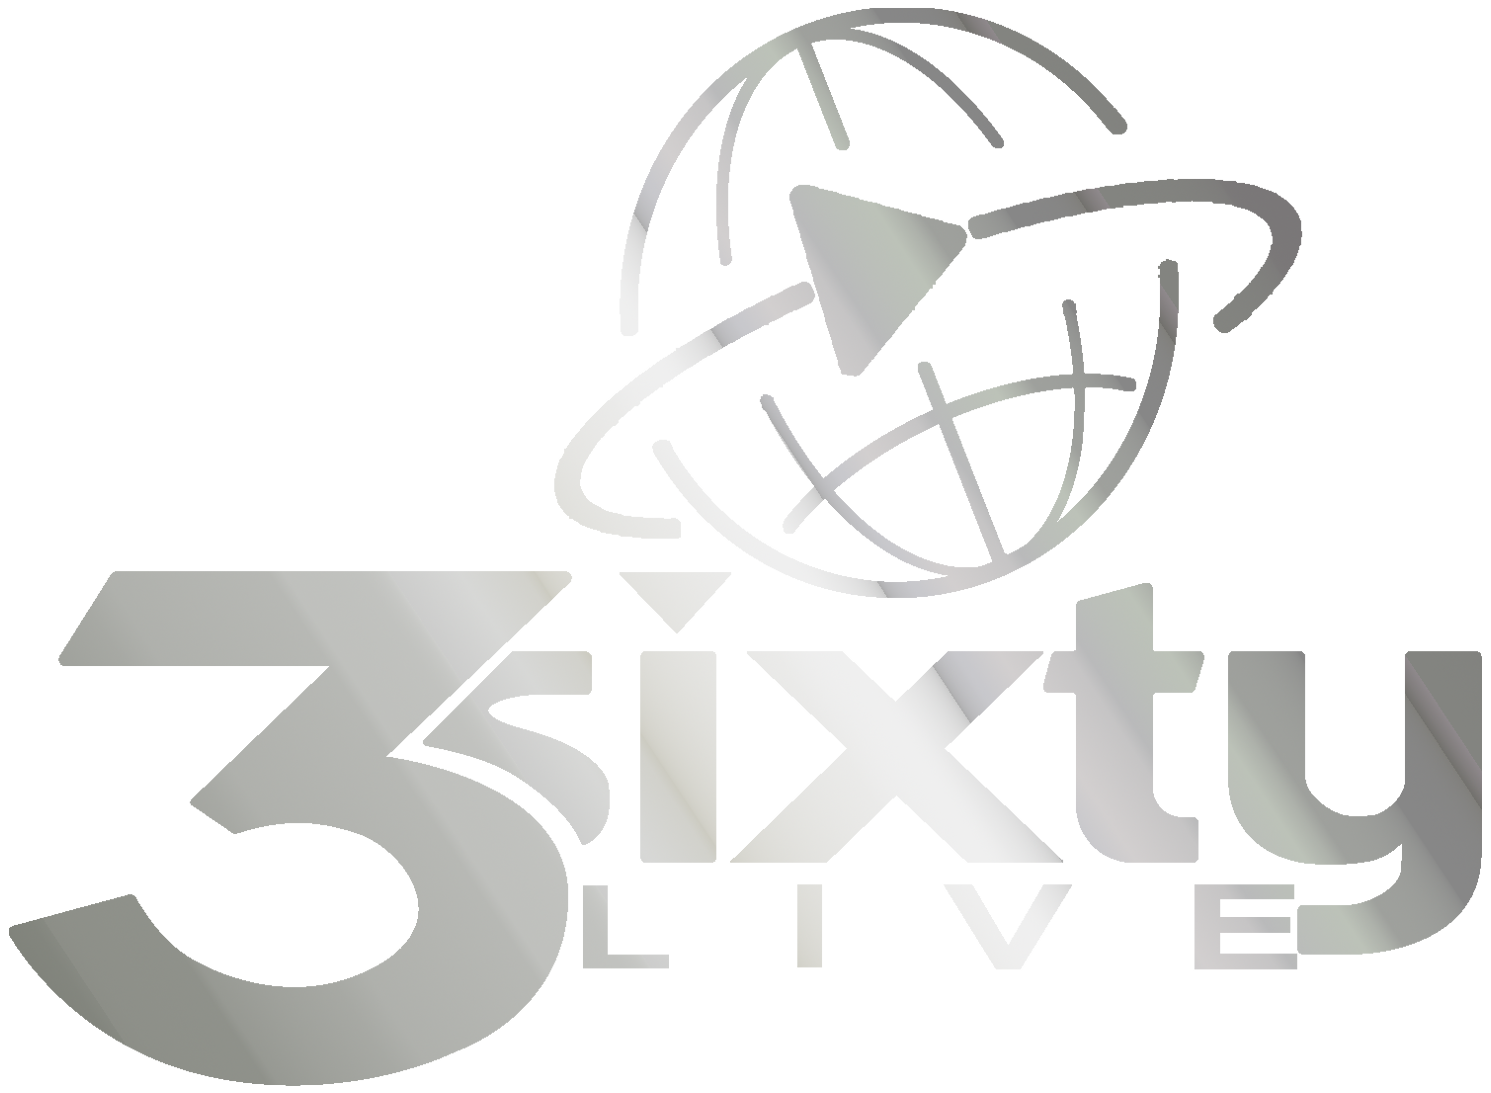 3sixty live